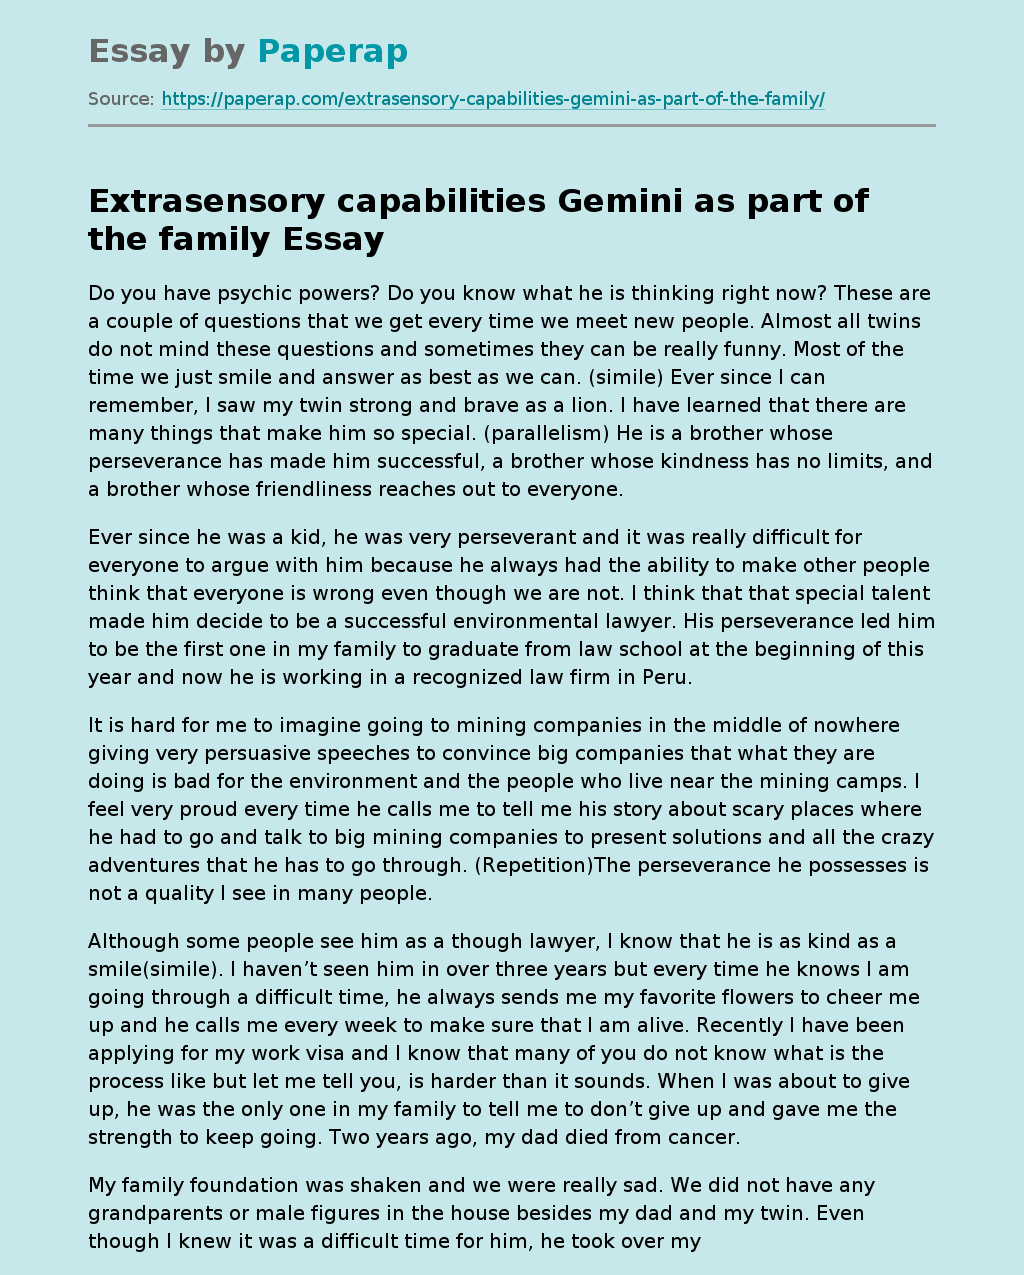 Extrasensory capabilities Gemini as part of the family